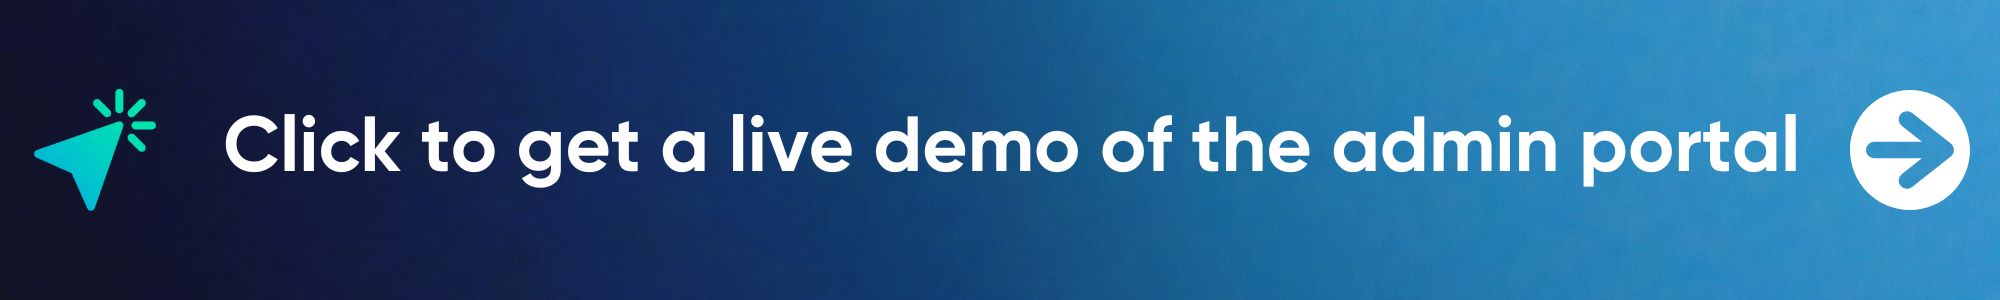 Admin portal live demo